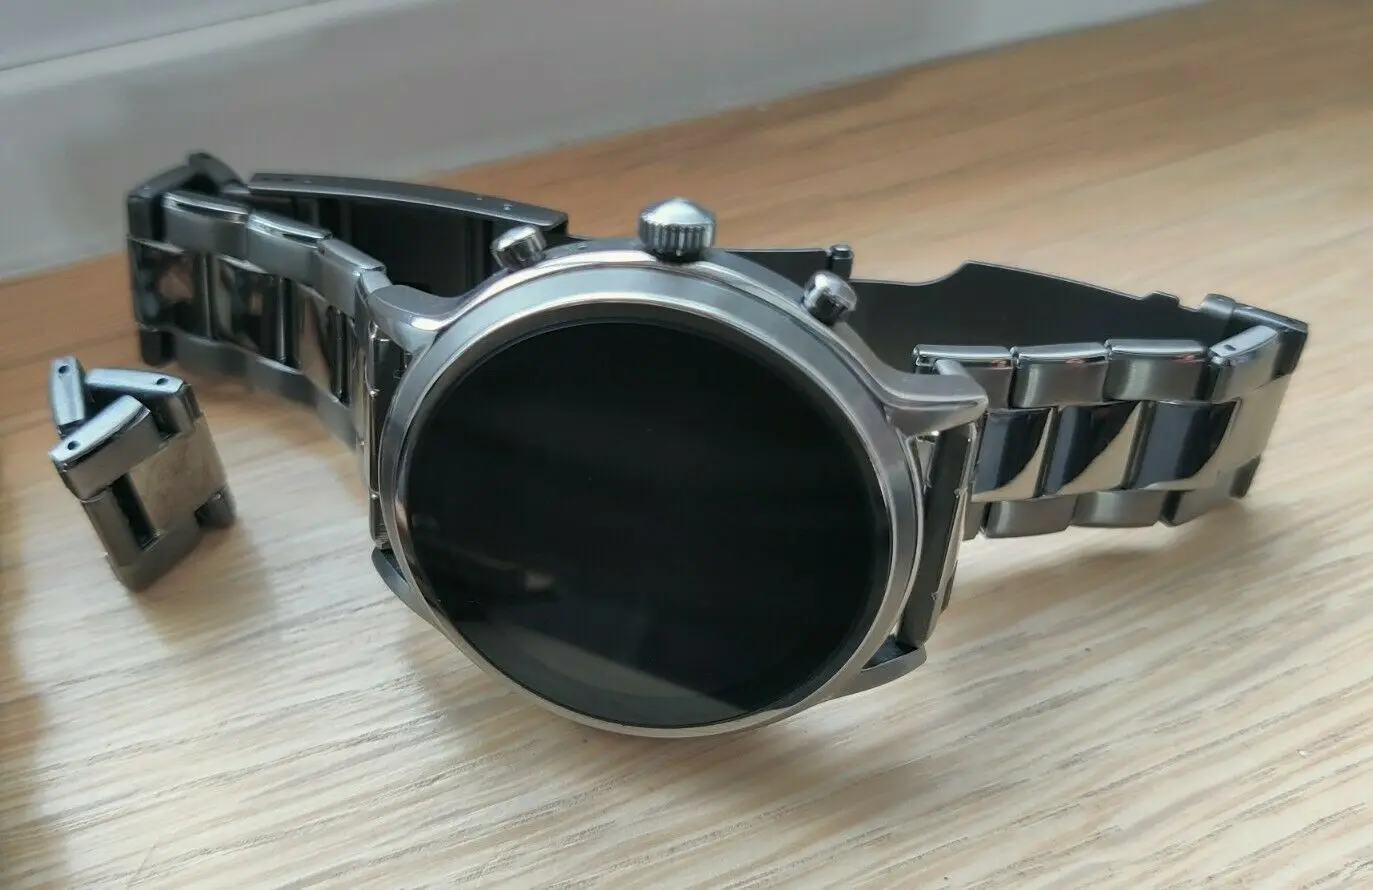 

Fossil The Carlyle HR Gen 5 44mm Case Men's Bracelet/Link Band Smart Watch